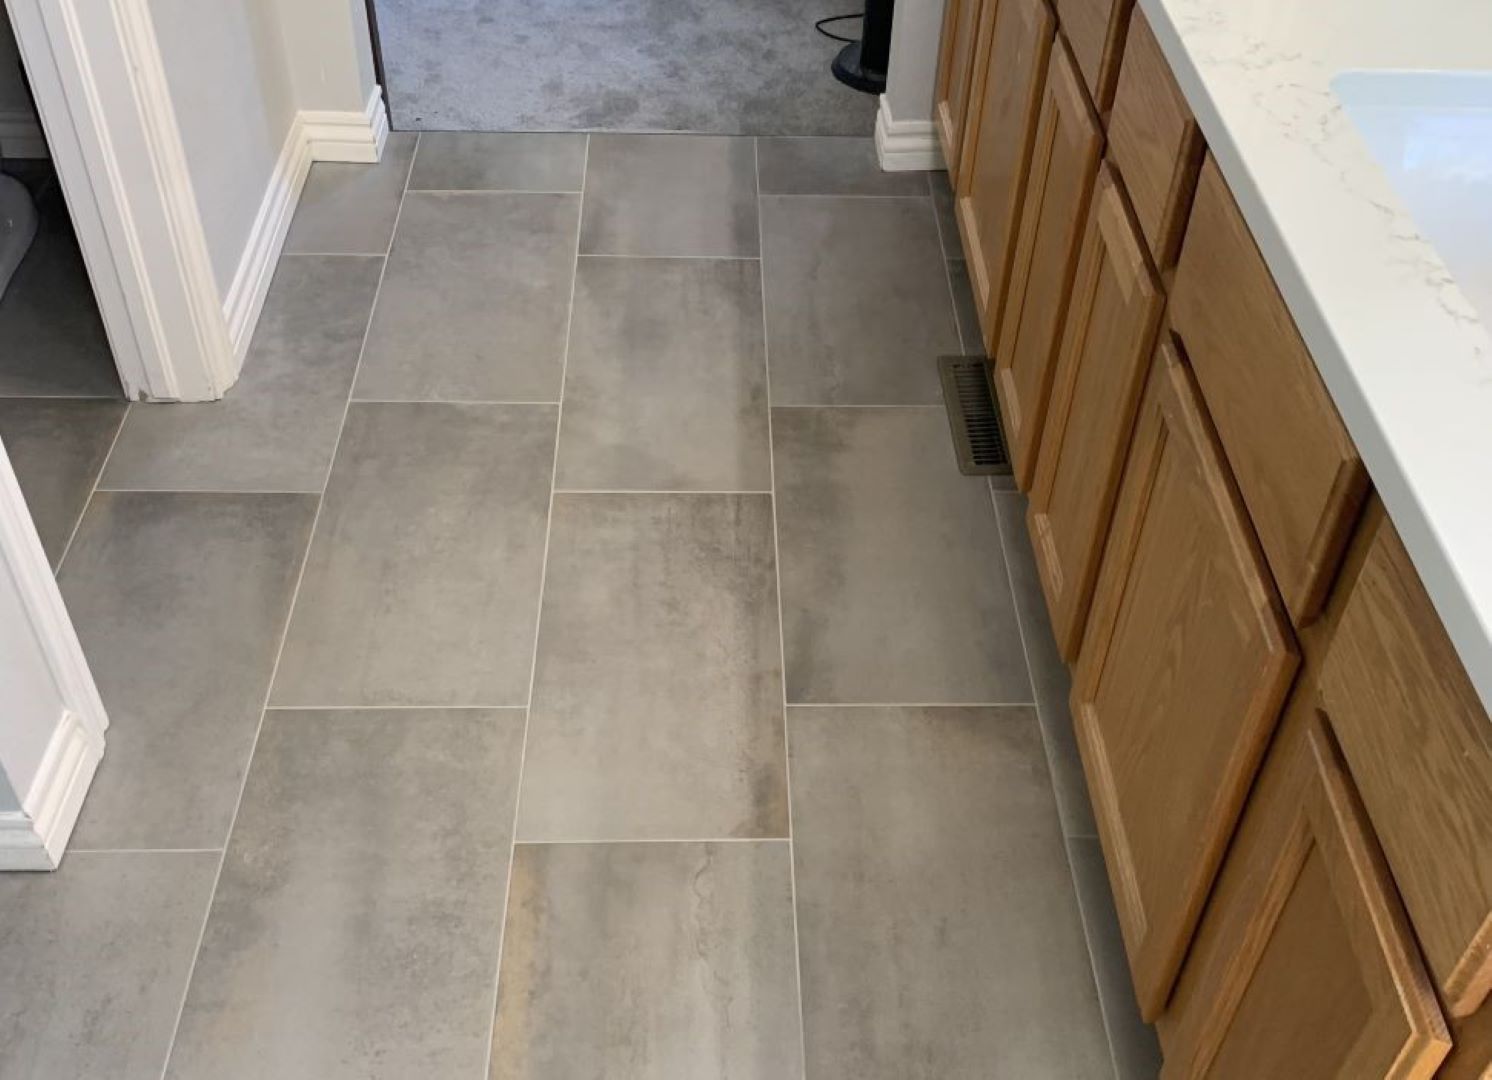 Bathroom tile flooring